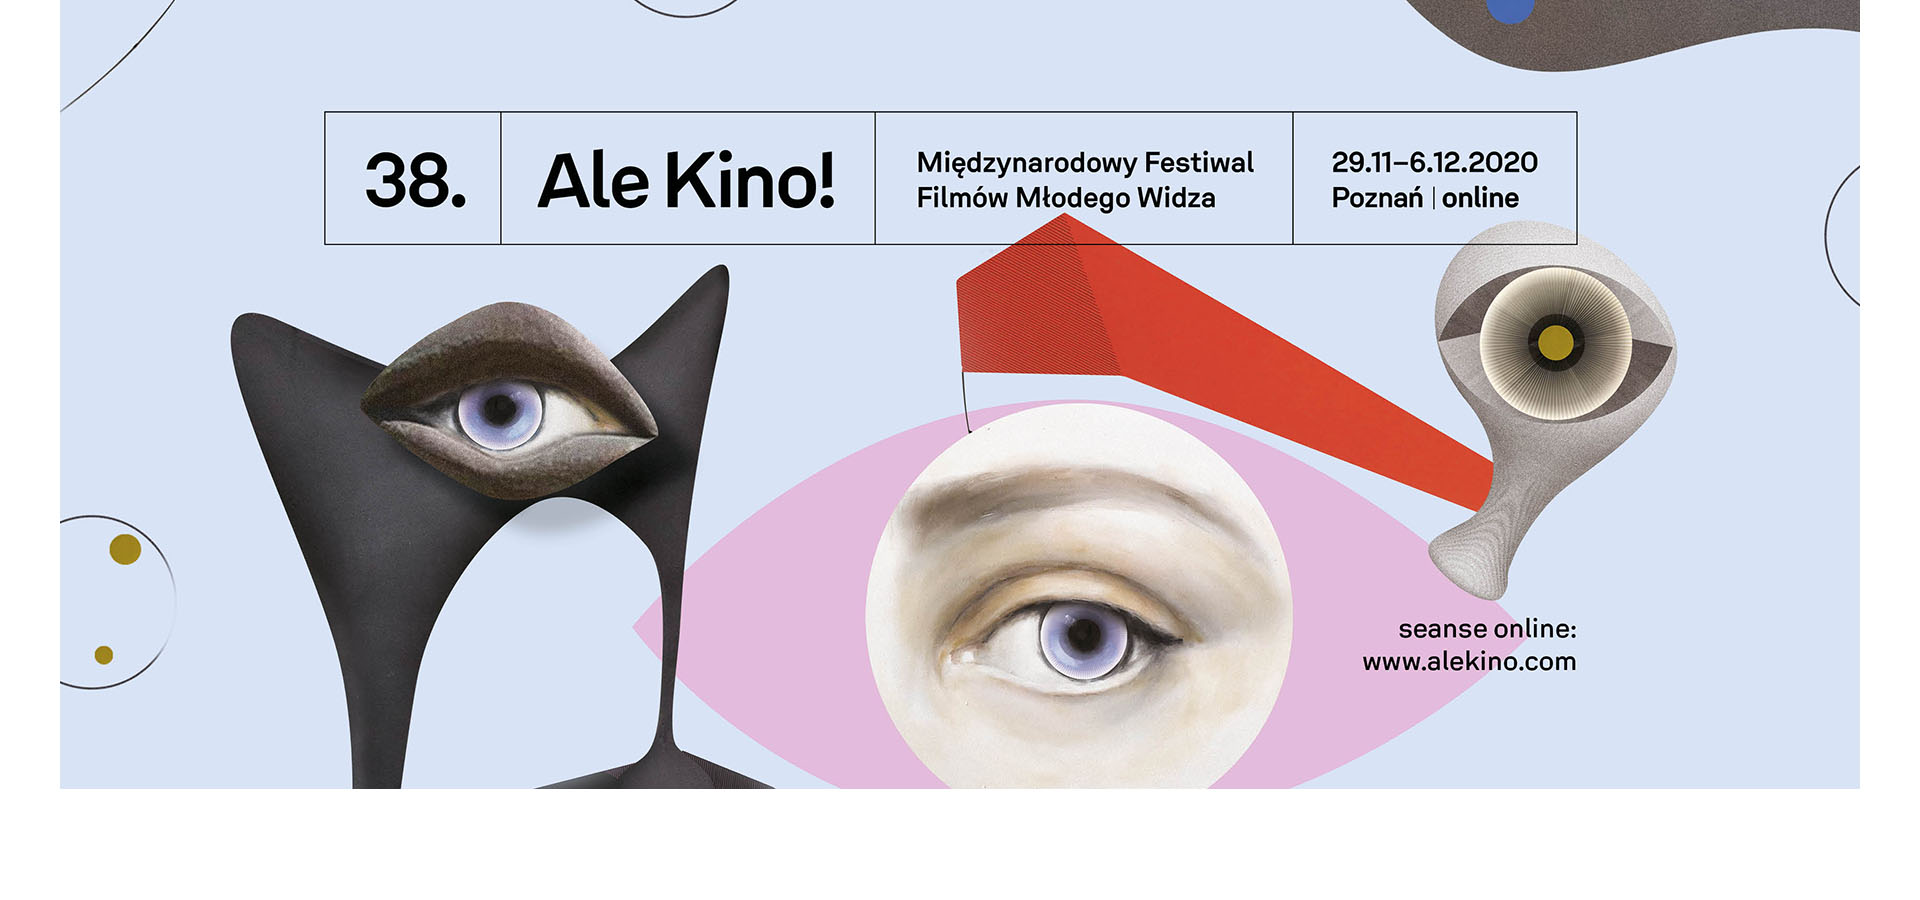 Można już kupować bilety na festiwal Ale Kino!